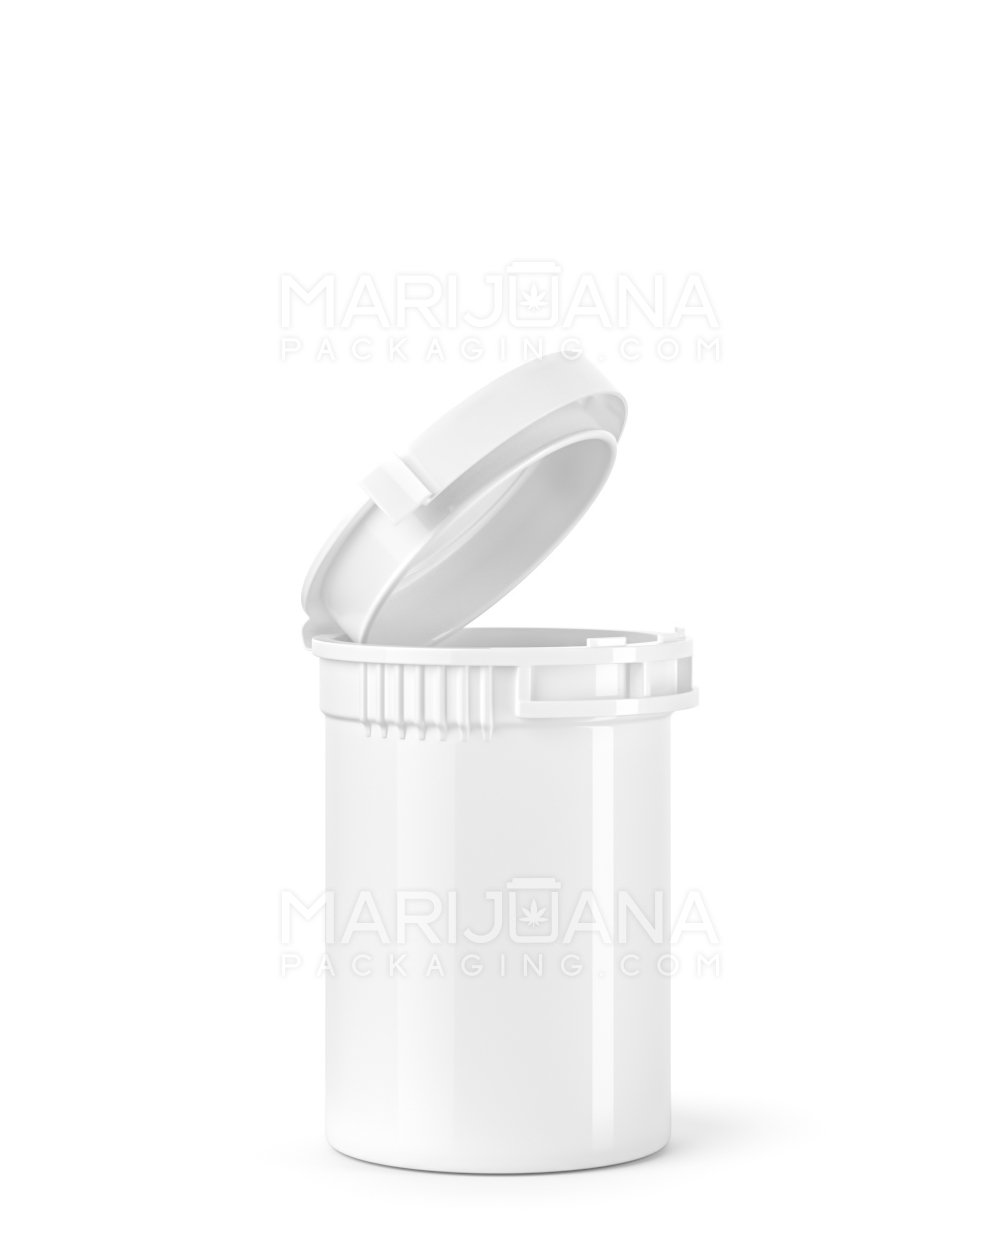 Child Resistant & Tamper Evident | Opaque White Pop Top Bottles | 6dr - 1g - 550 Count - 1